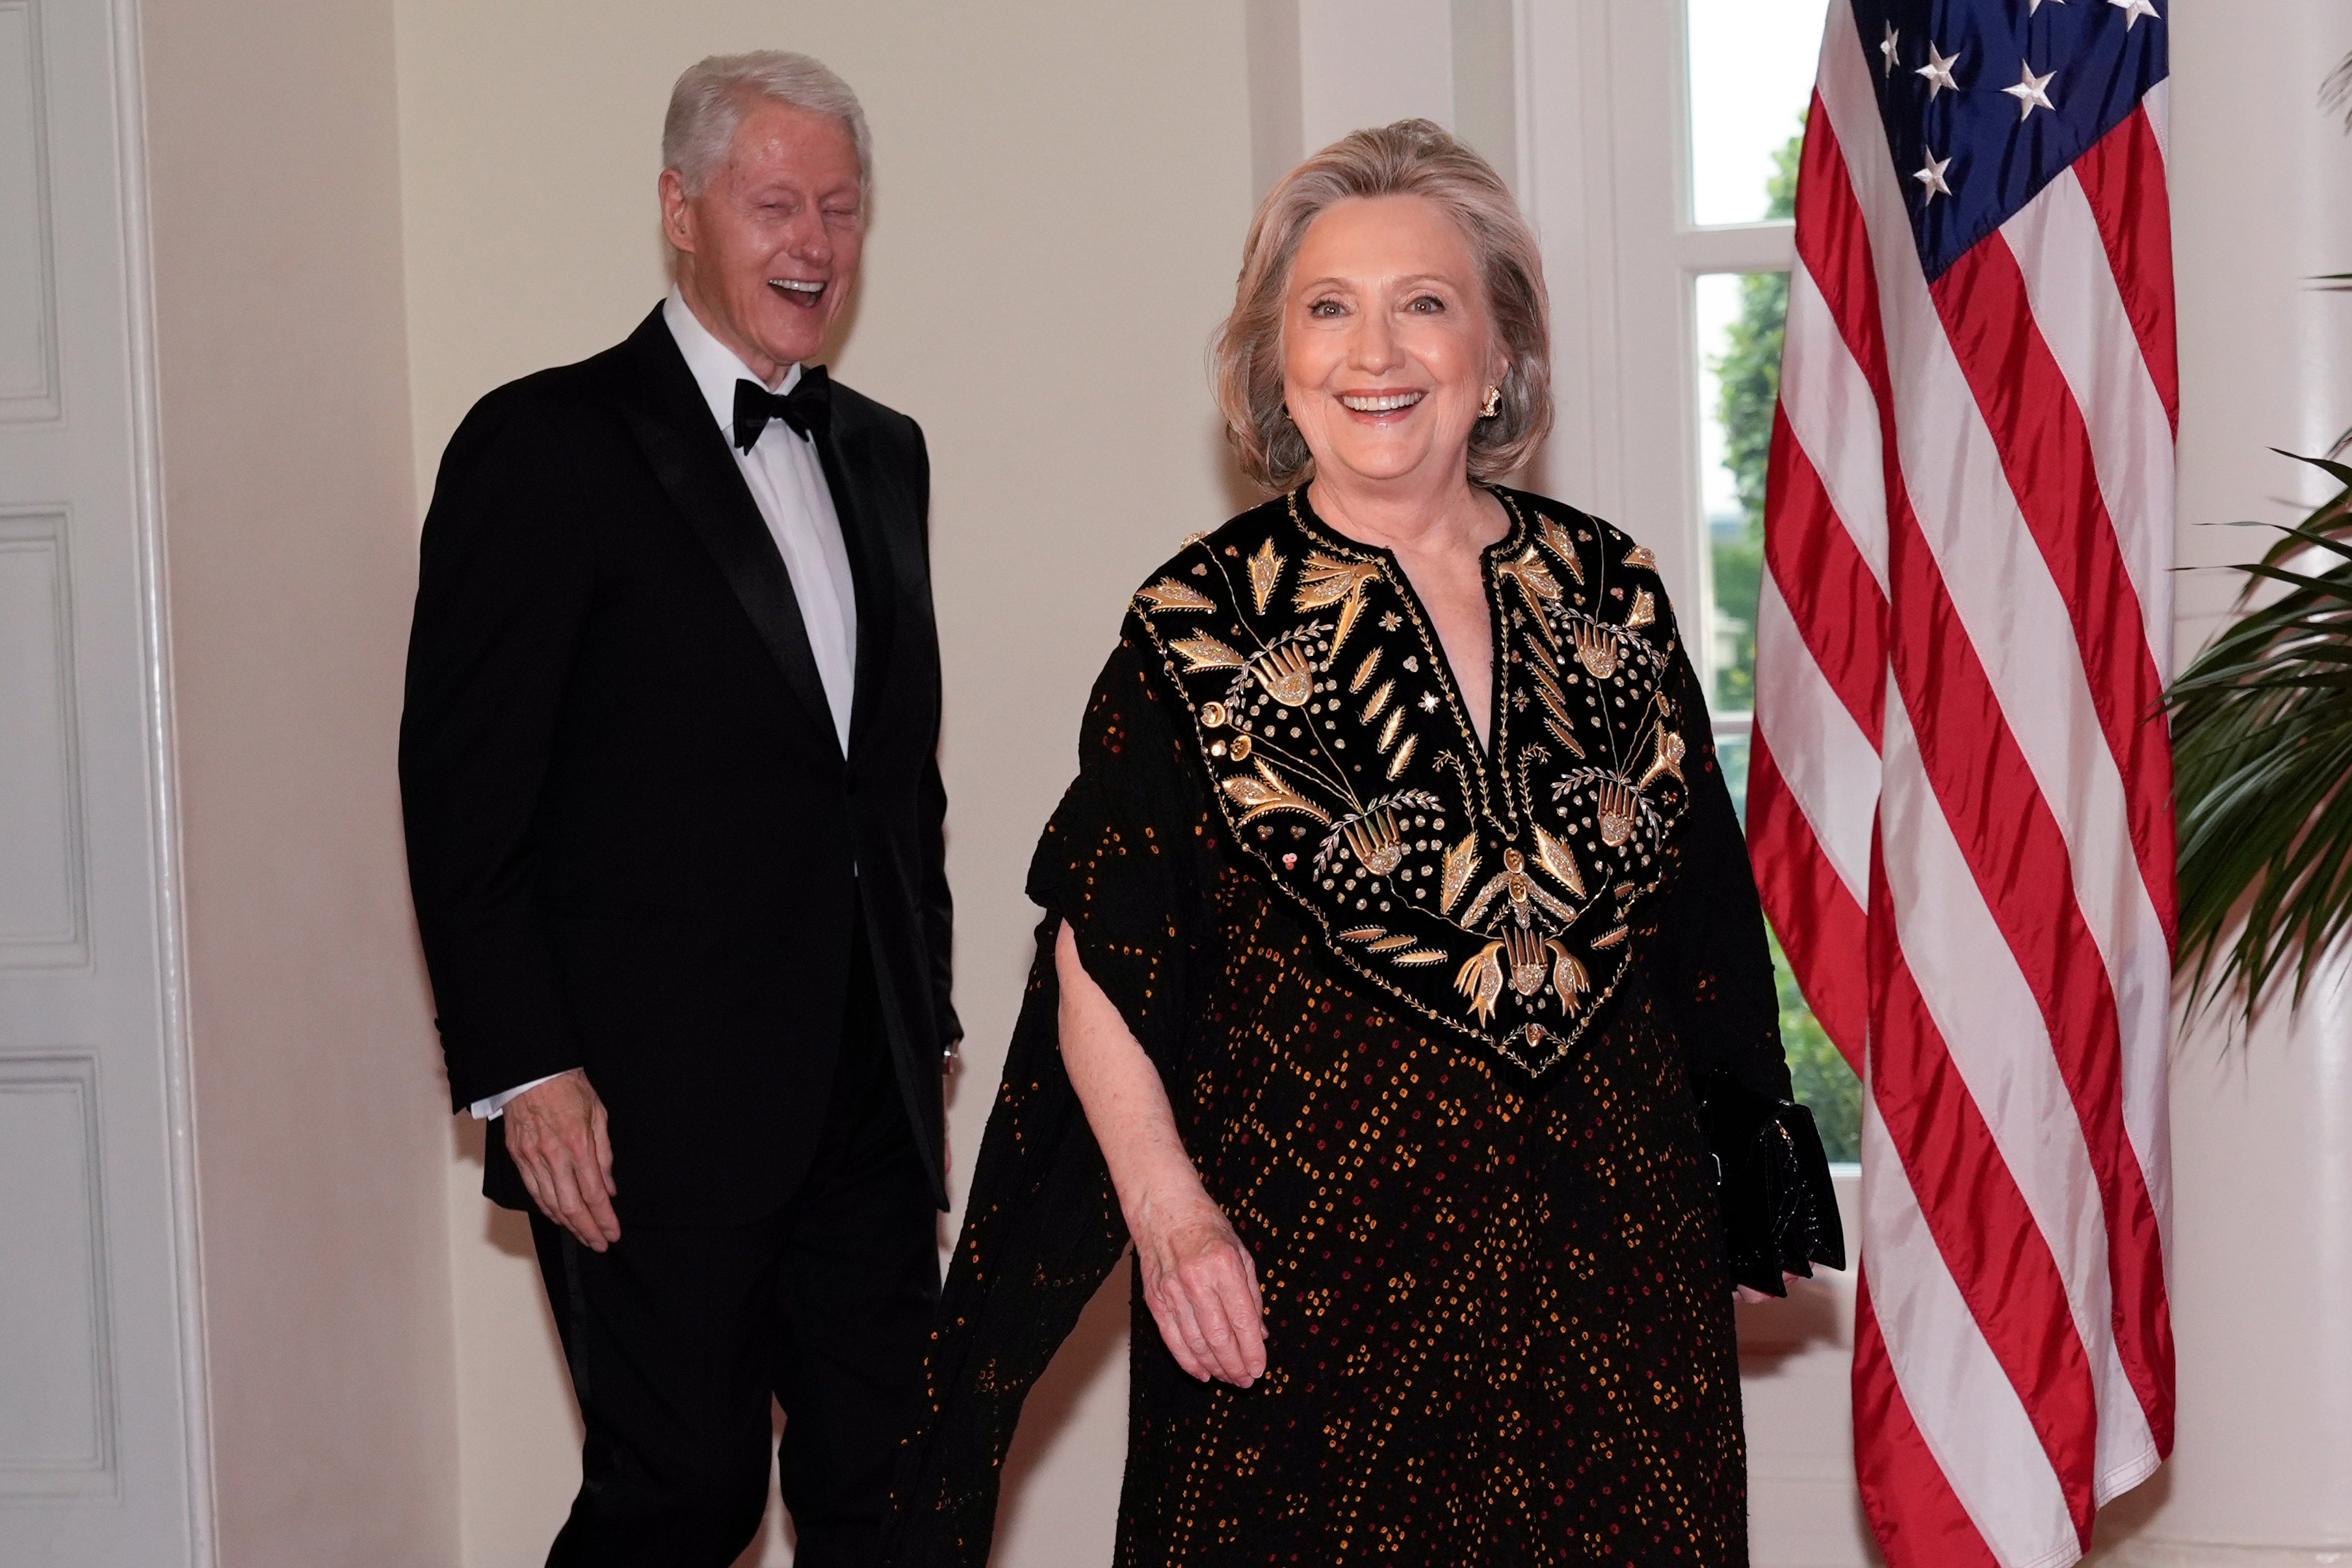 Former President Bill Clinton and Hillary Clinton